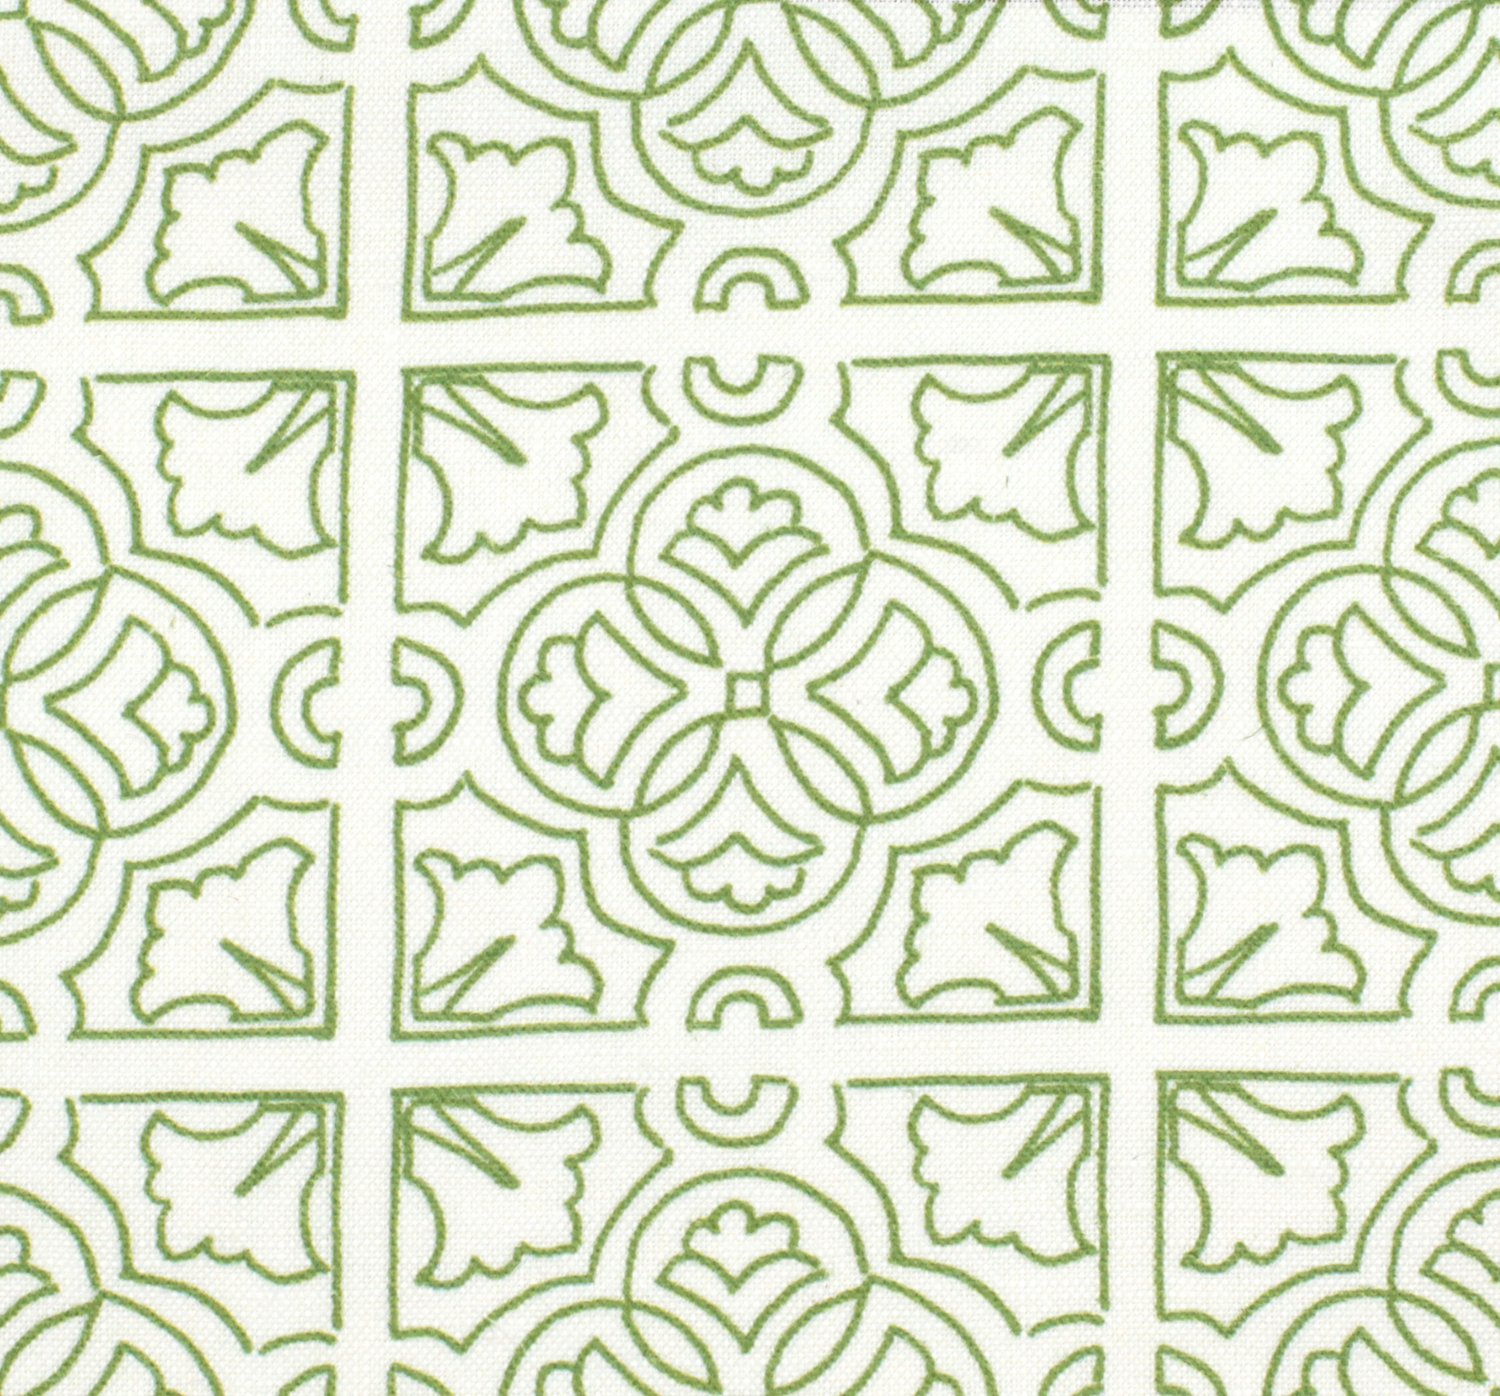 Irish Tile in grass